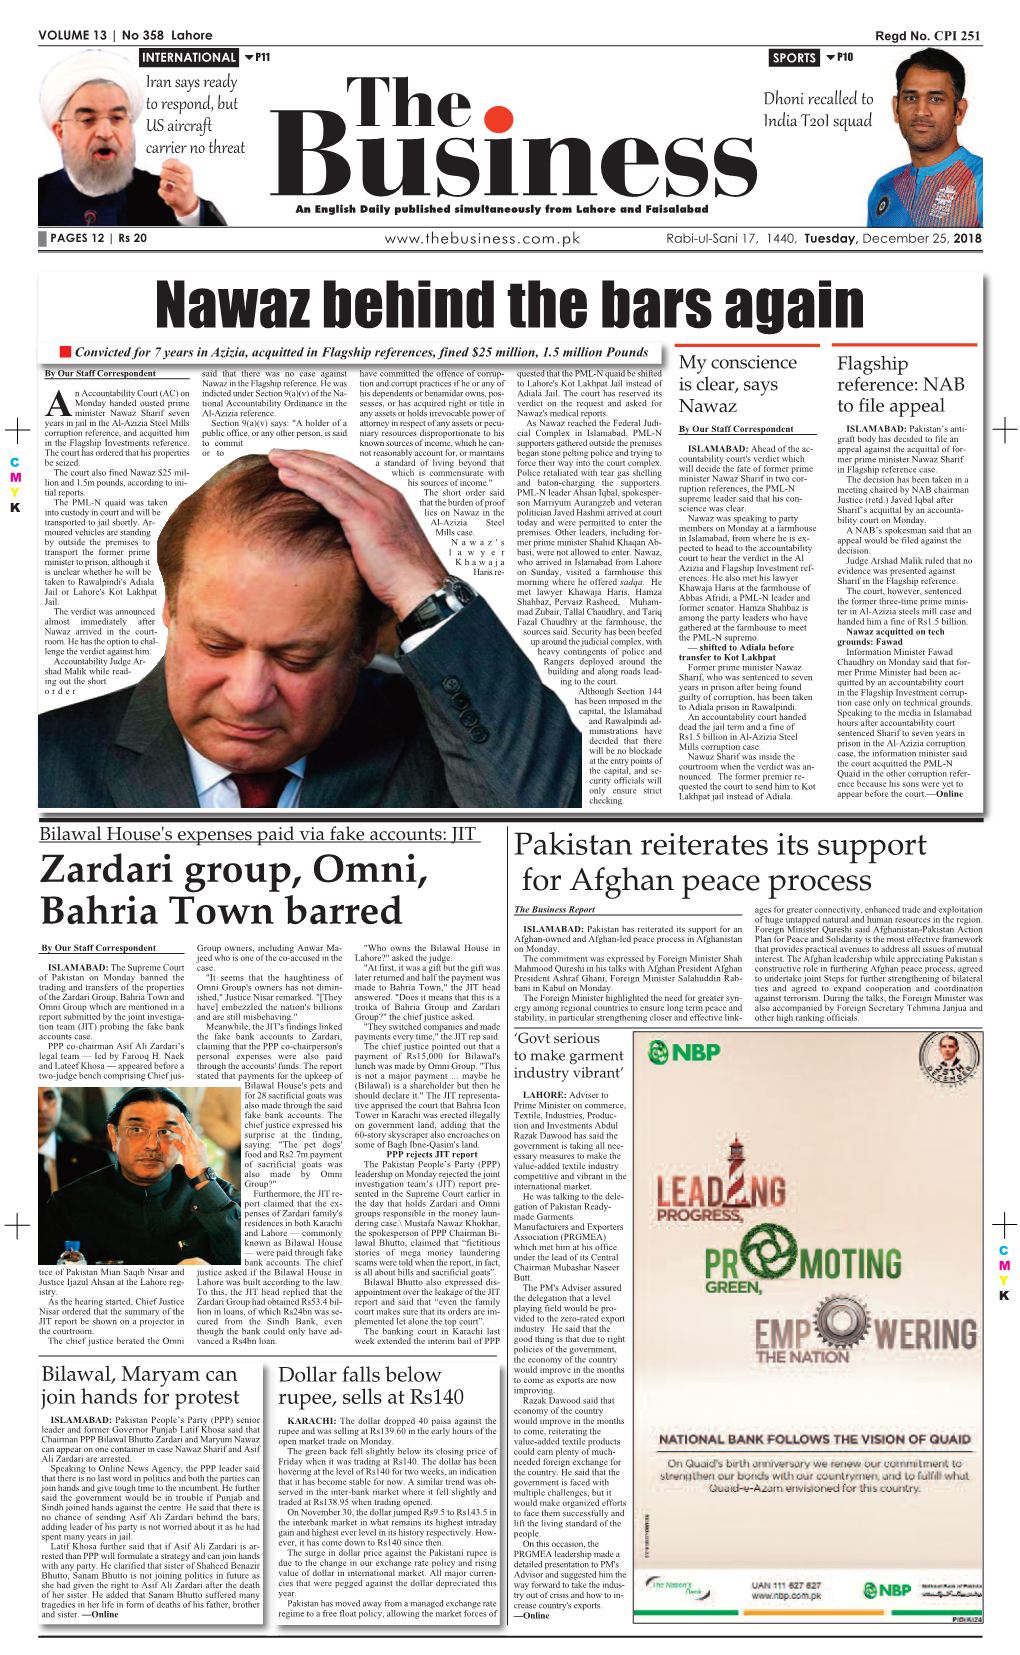 Zardari Group, Omni, Bahria Town Barred